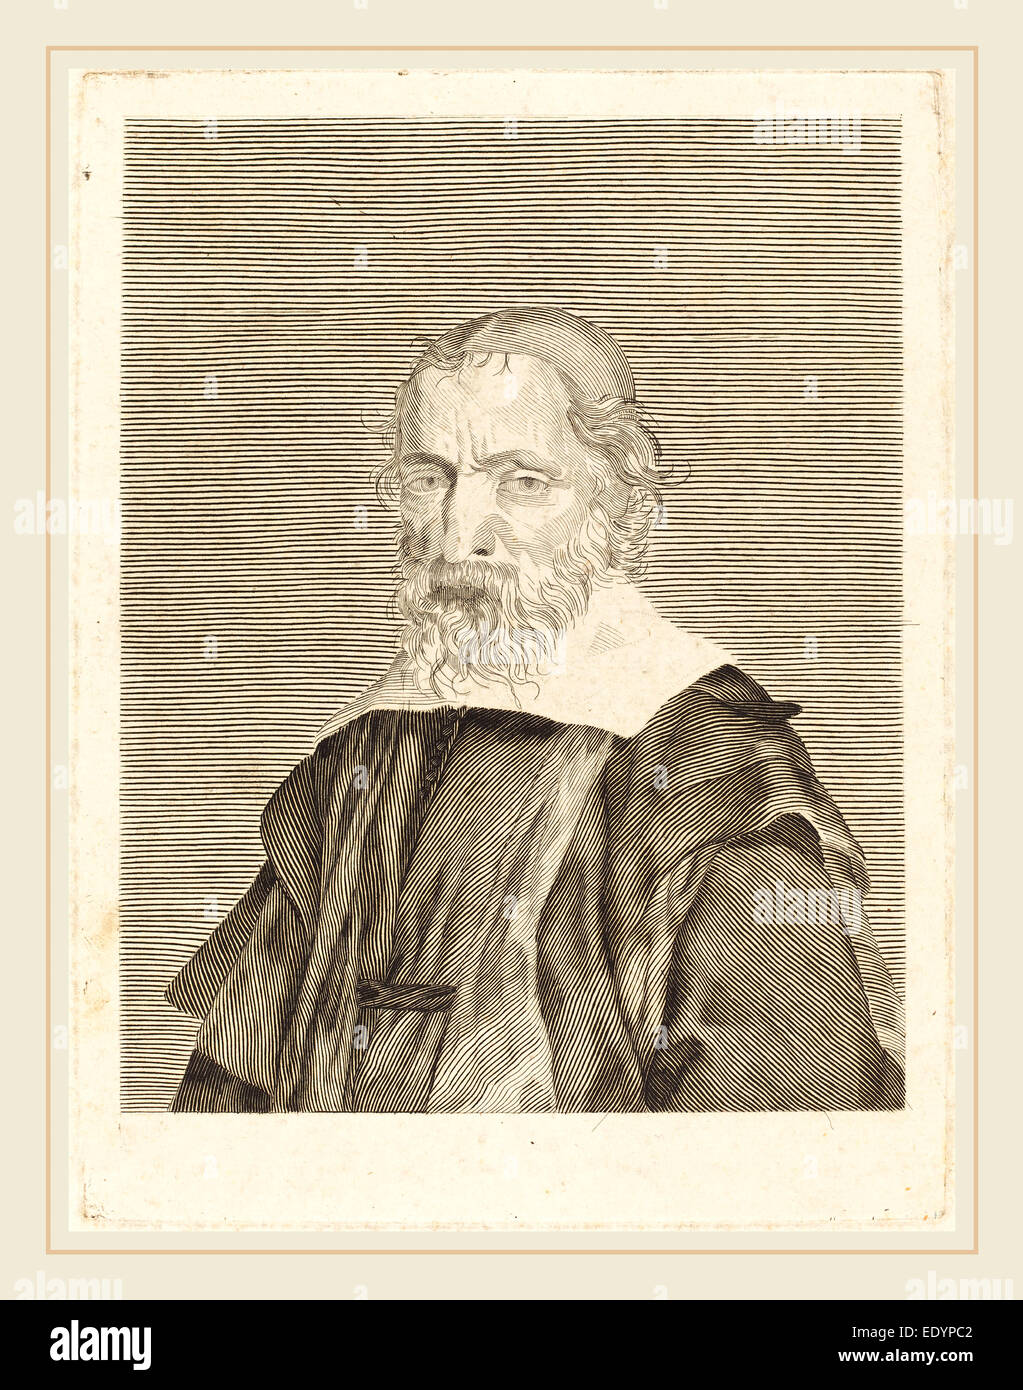 after Claude Mellan, Nicolas-Claude Fabri de Peiresc, 1637 or after, engraving on laid paper Stock Photo